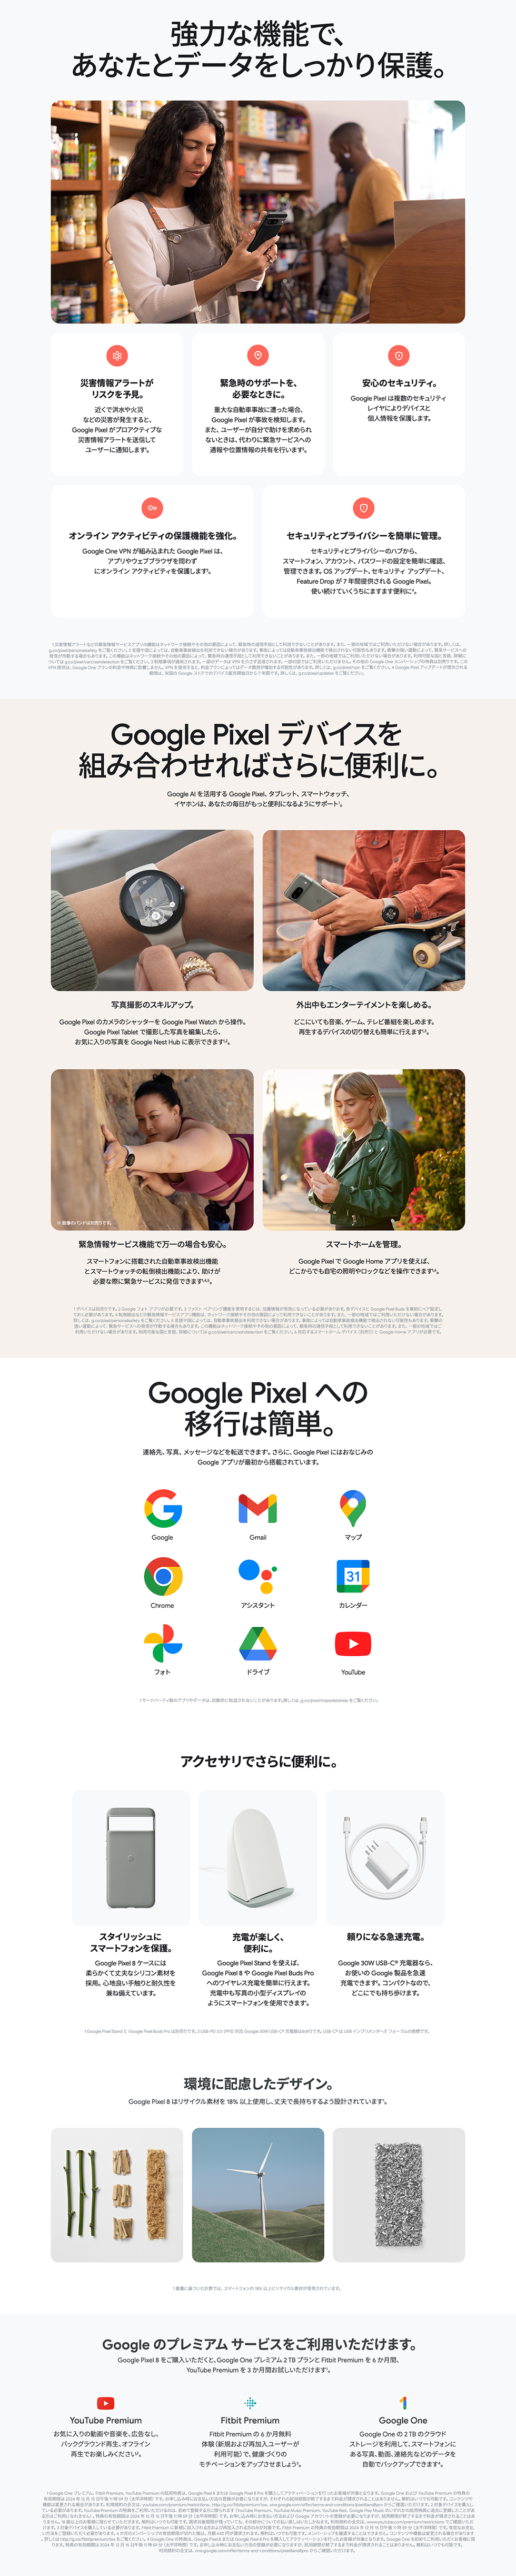 Google Pixel 8の特長画像